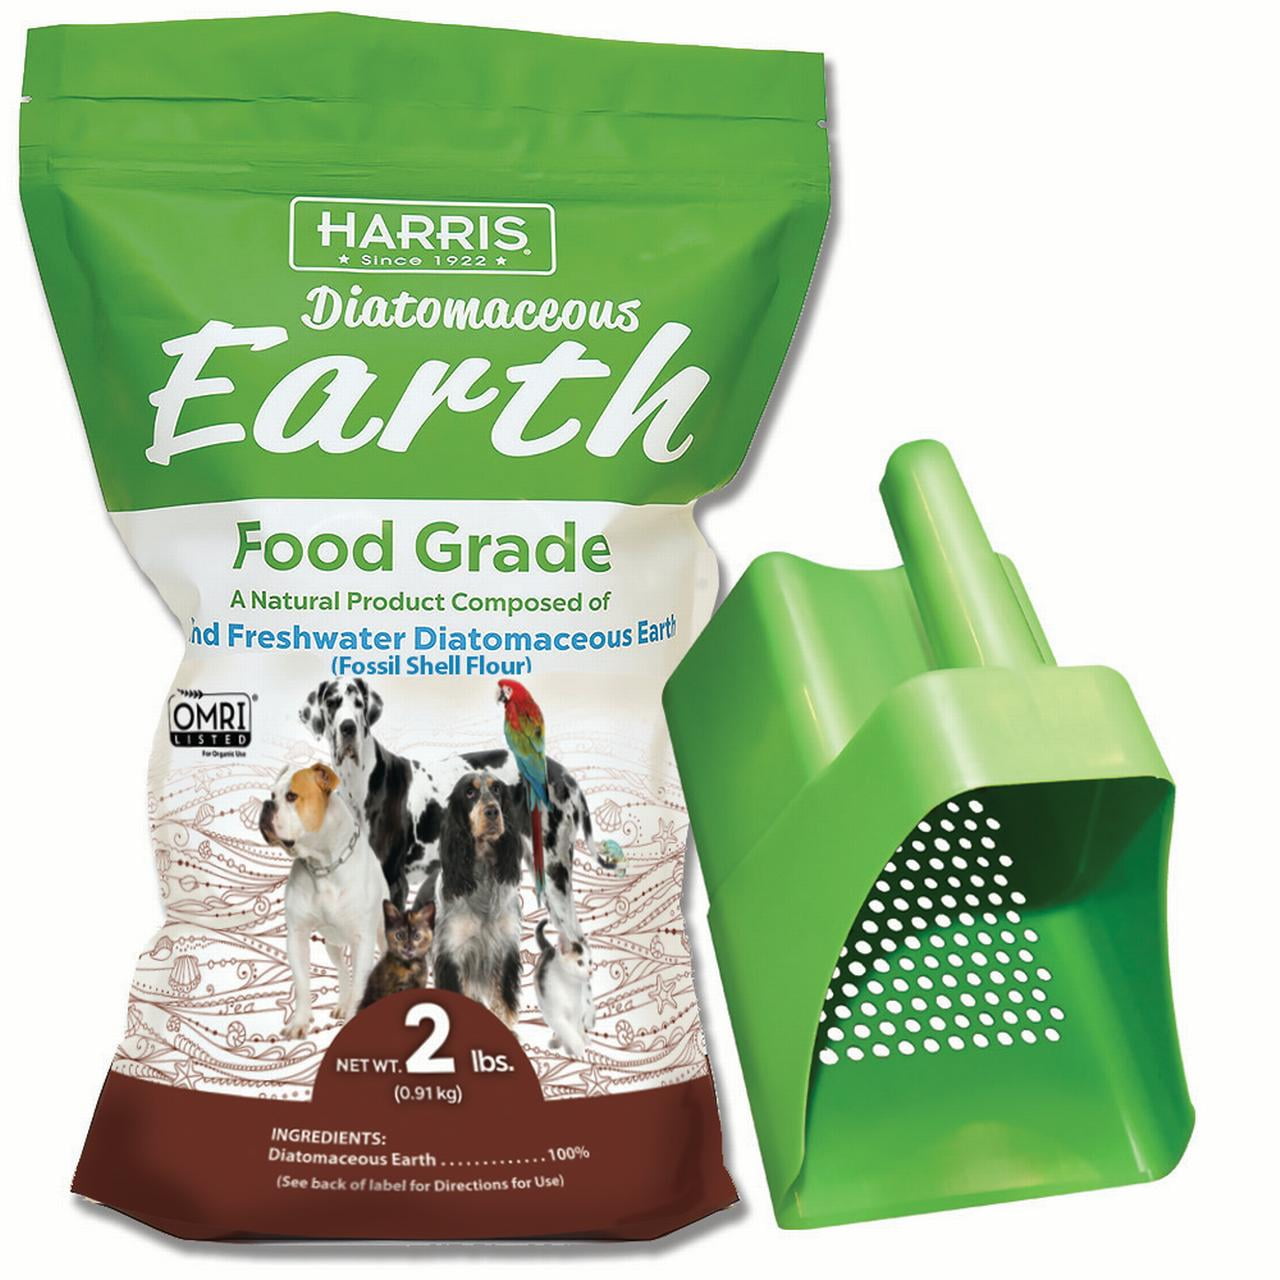 Food Grade Diatomaceous Earth For Pets With Sifter Applicator Walmart Com Walmart Com